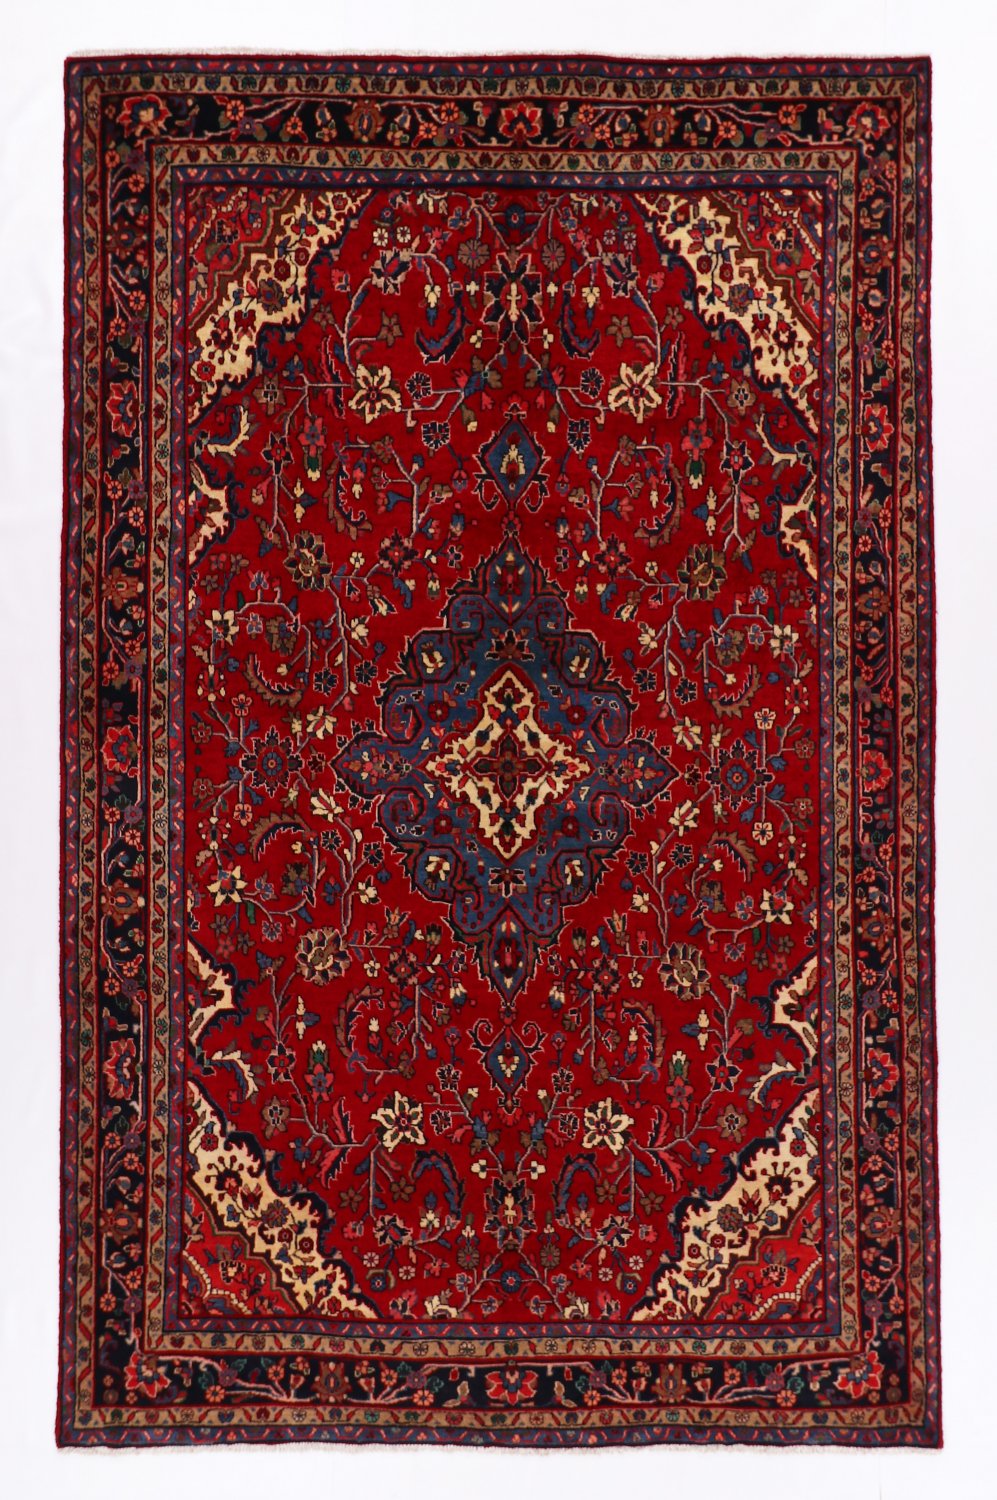 Perzisch tapijt Hamedan 316 x 204 cm